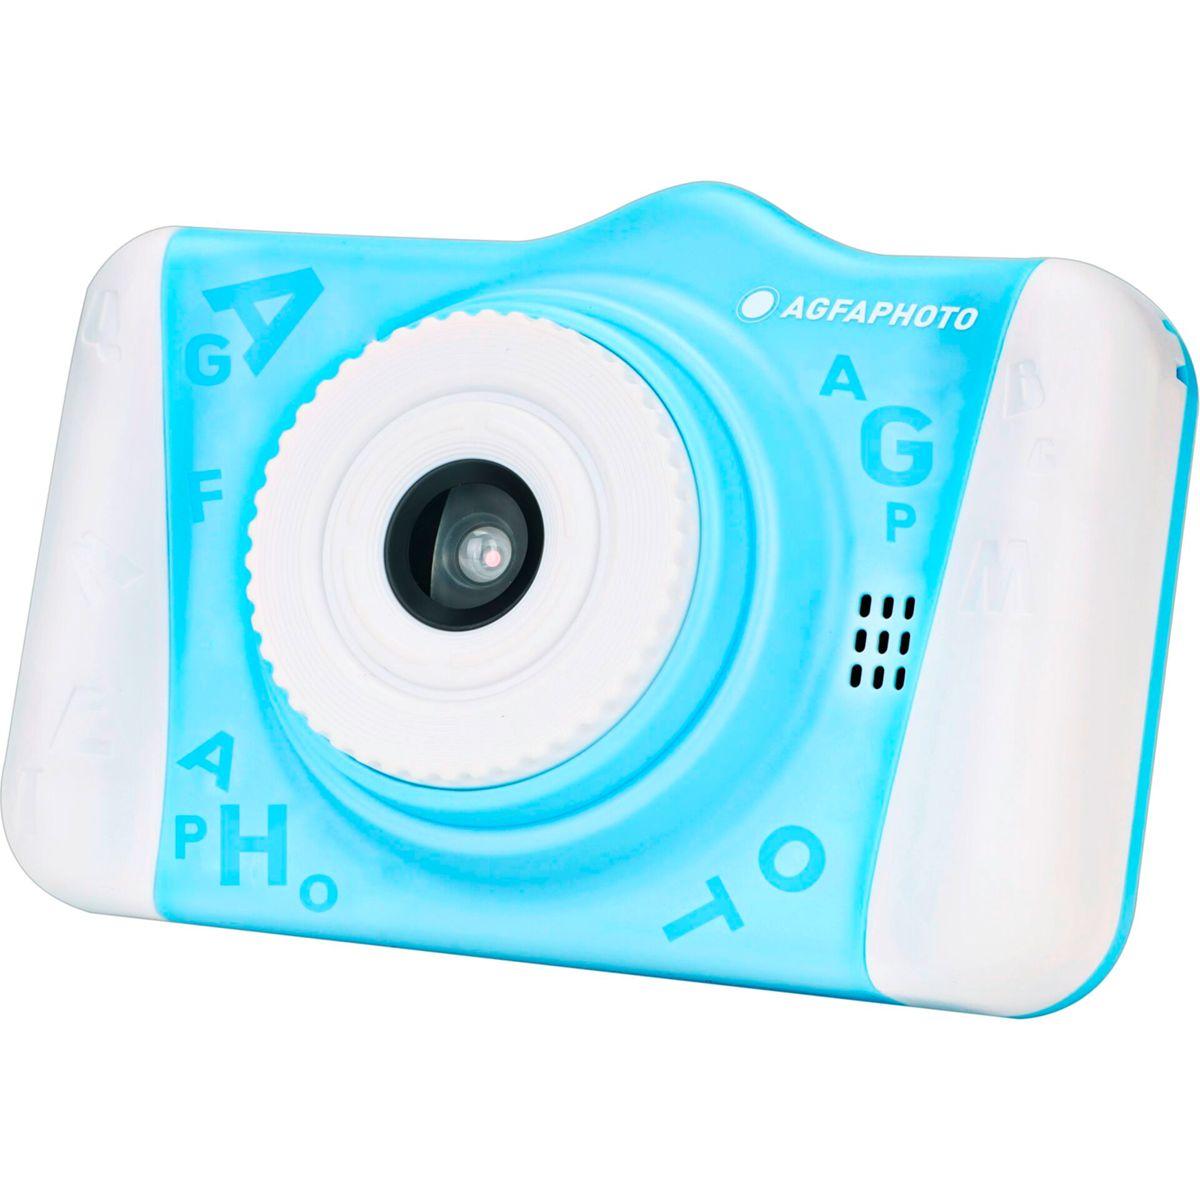 Realikids AGFAPHOTO blau Kinderkamera blau 2 Cam 8GB SD